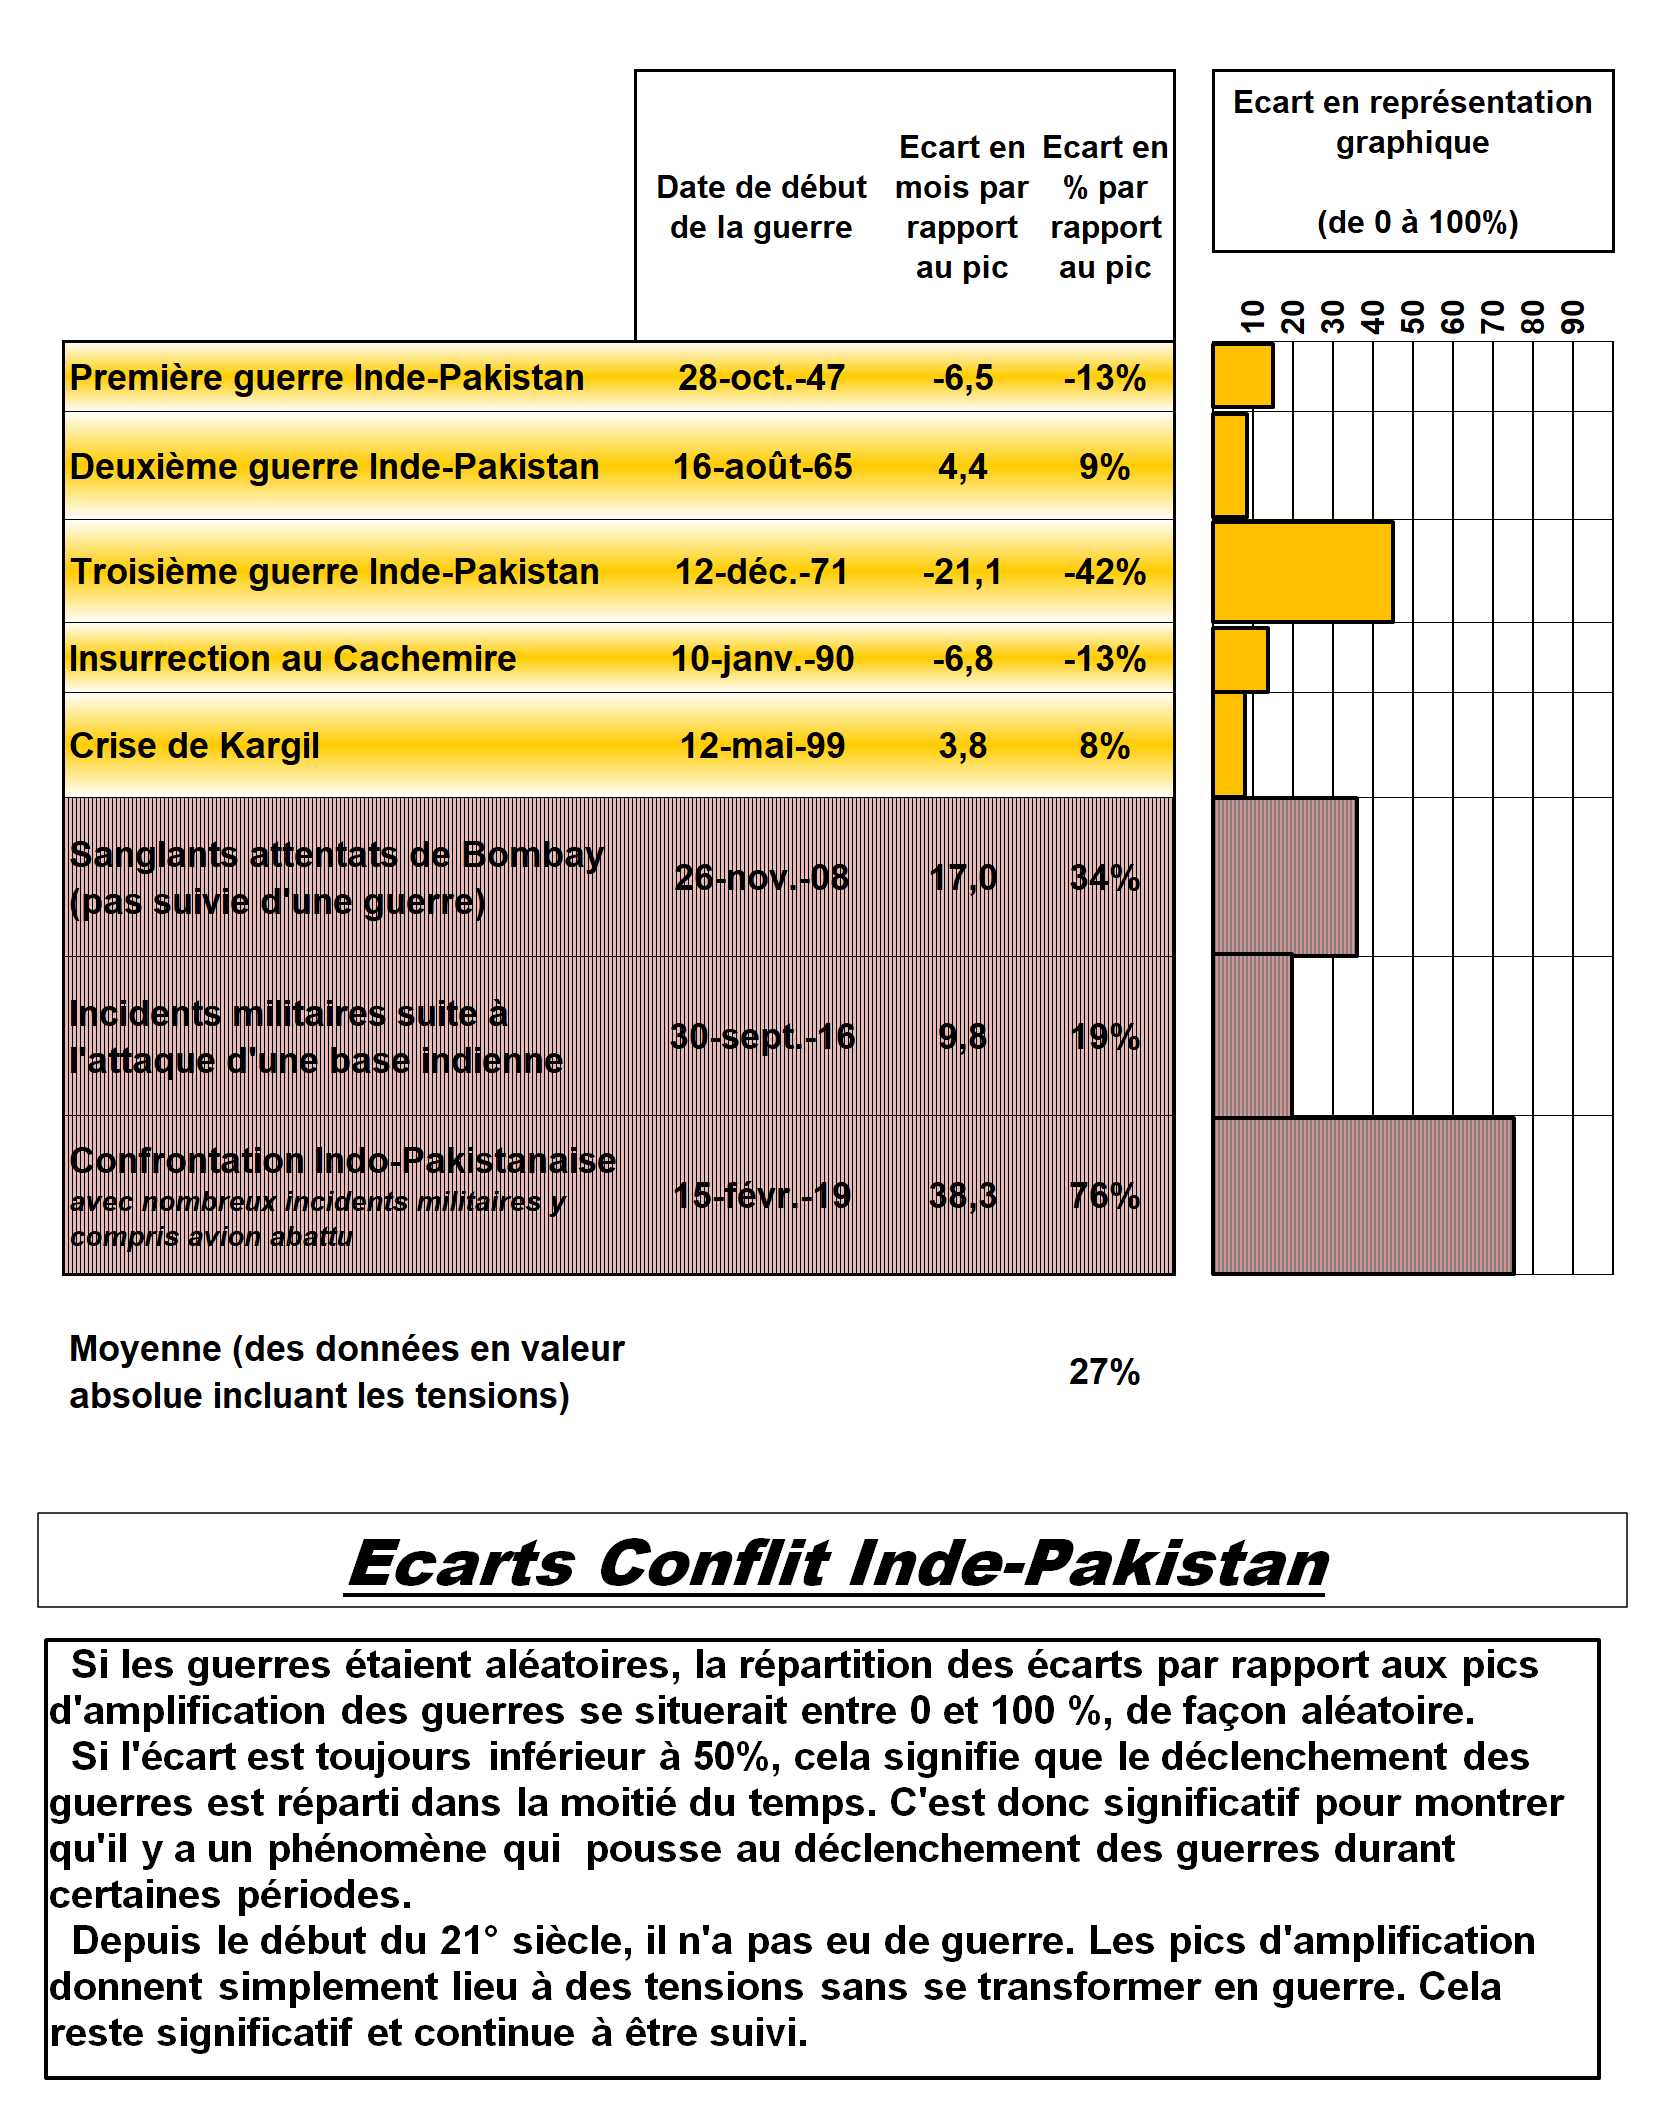 Ecarts Conflit Inde-Pakistan